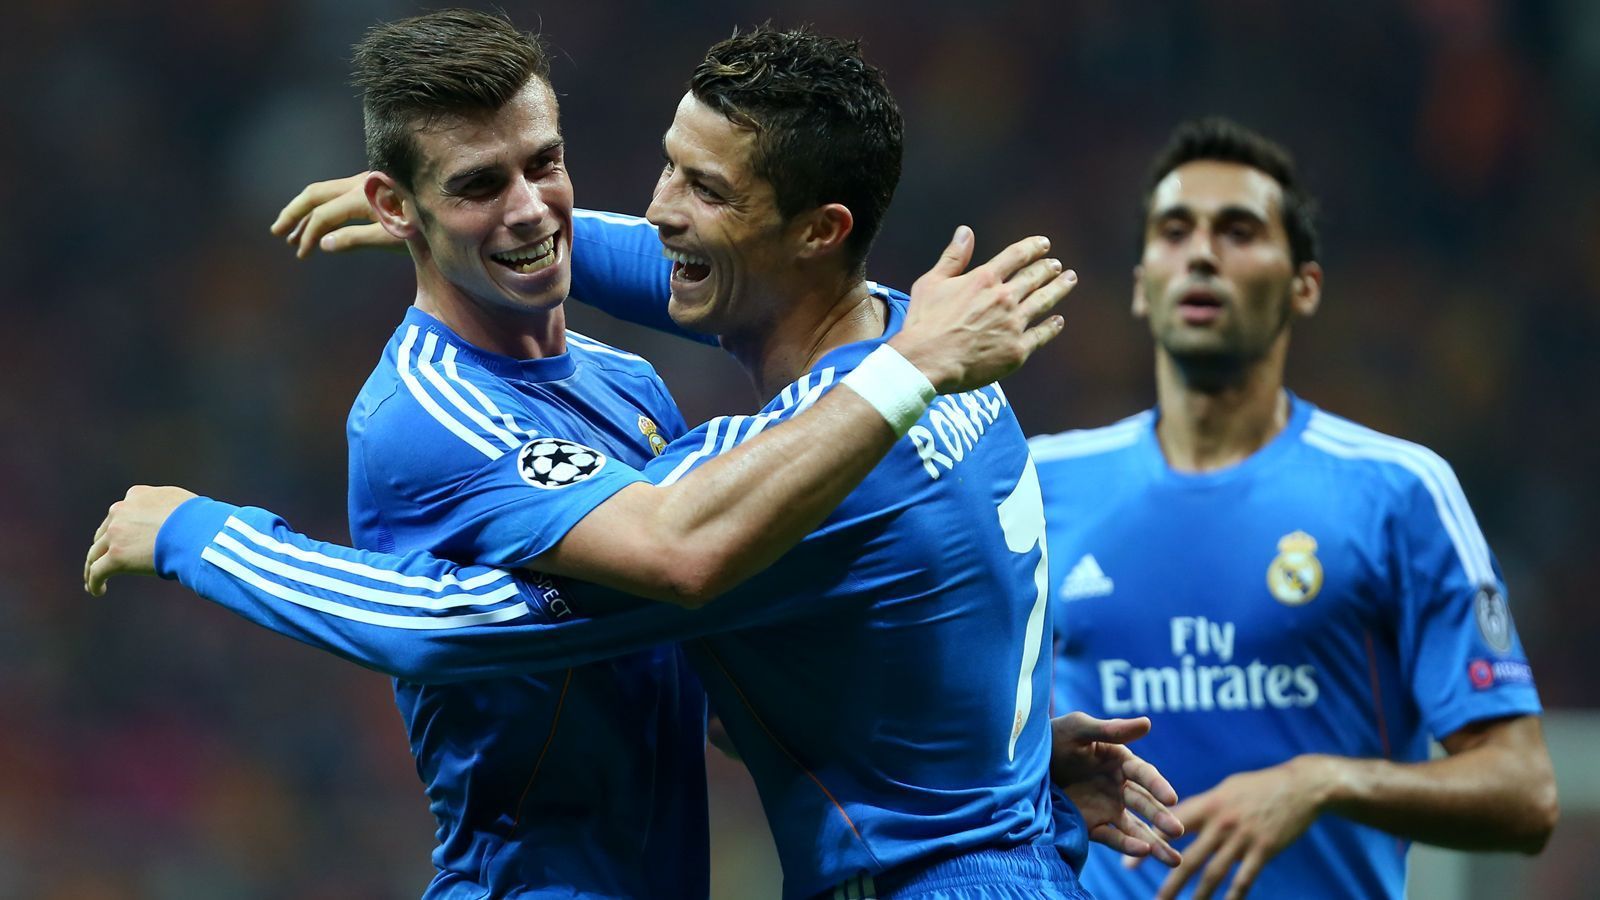 
                <strong>Gareth Bale und Cristiano Ronaldo (Real Madrid, Saison 2013/14)</strong><br>
                Tore gesamt: 23 (Cristiano Ronaldo mit 17 Toren, Gareth Bale mit sechs Toren)
              